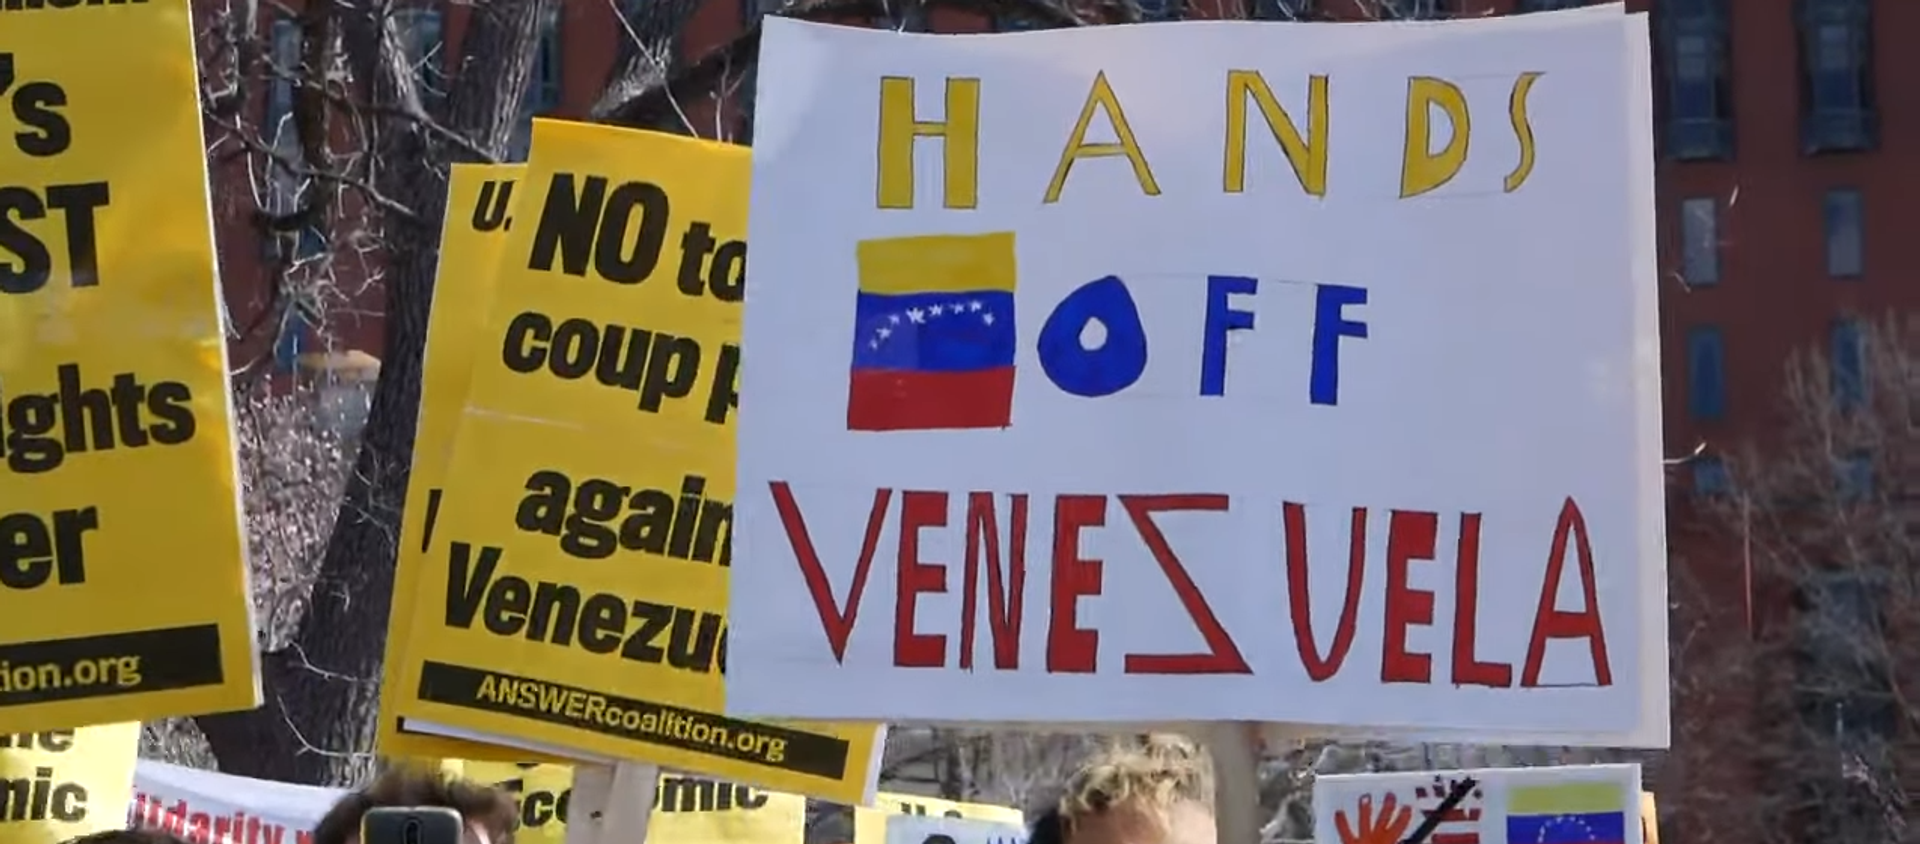 Protesters rally in Washington, DC, supporting Venezuelan President Nicolas Maduro - Sputnik International, 1920, 25.04.2019